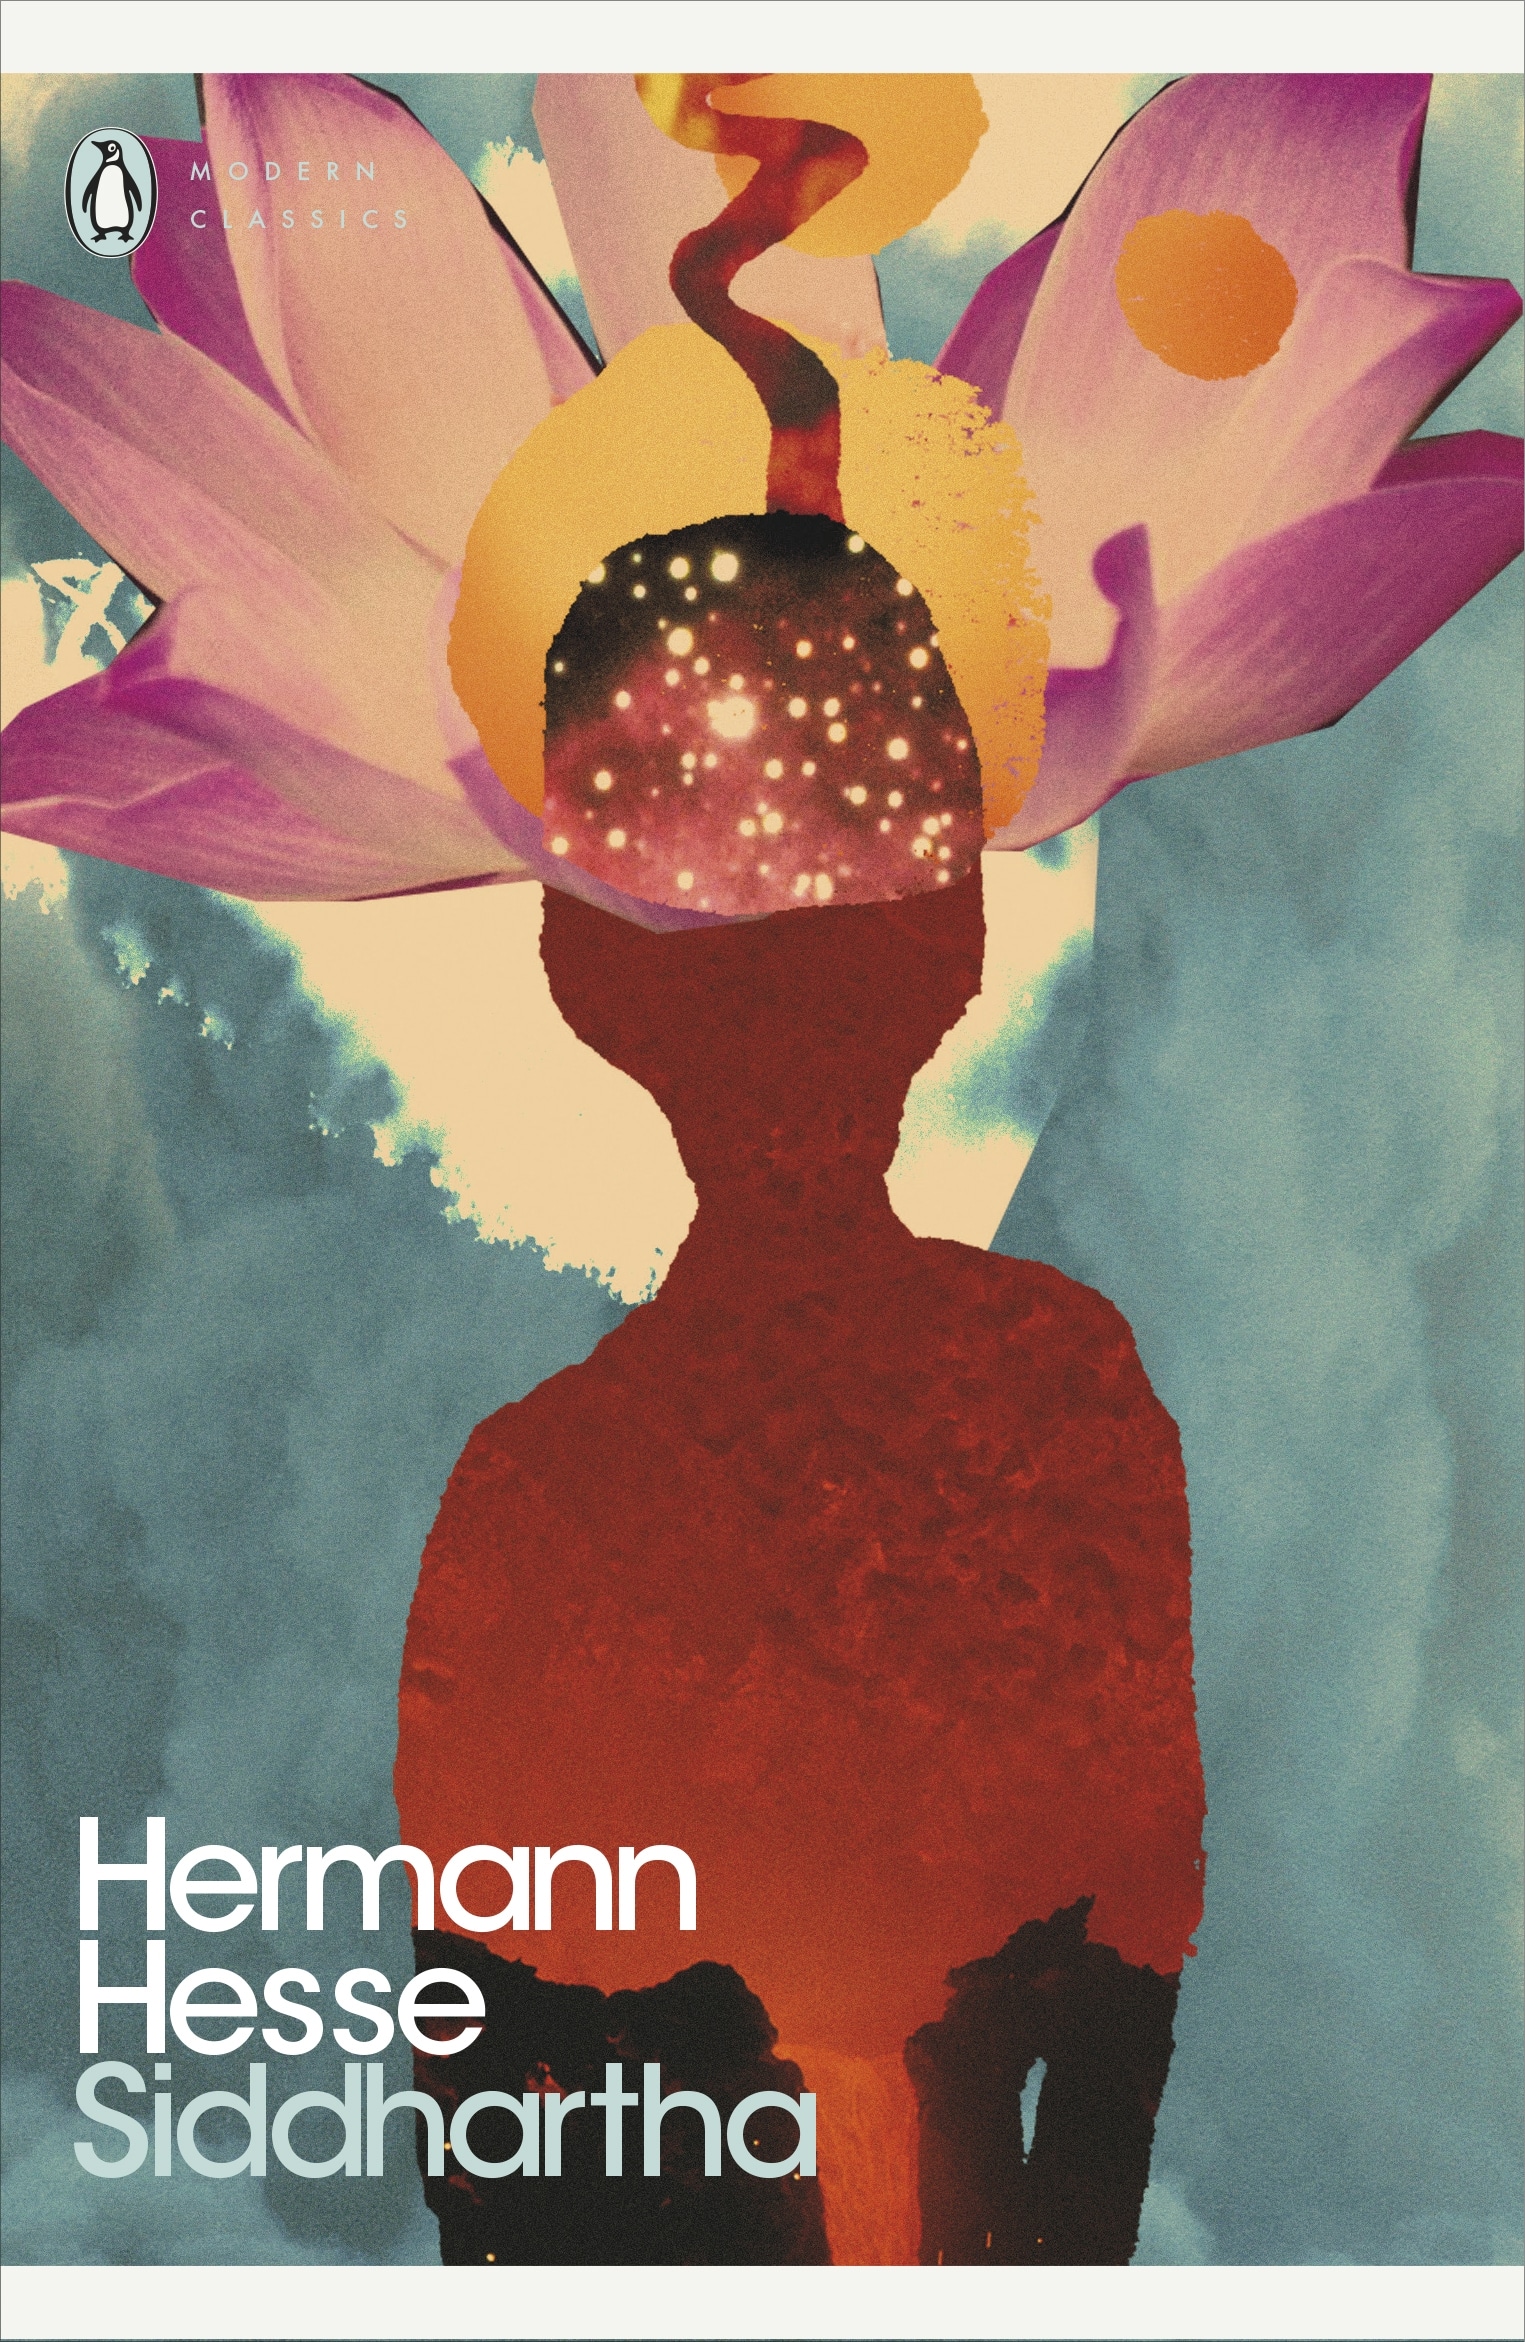 Book “Siddhartha” by Herman Hesse, Paulo Coelho